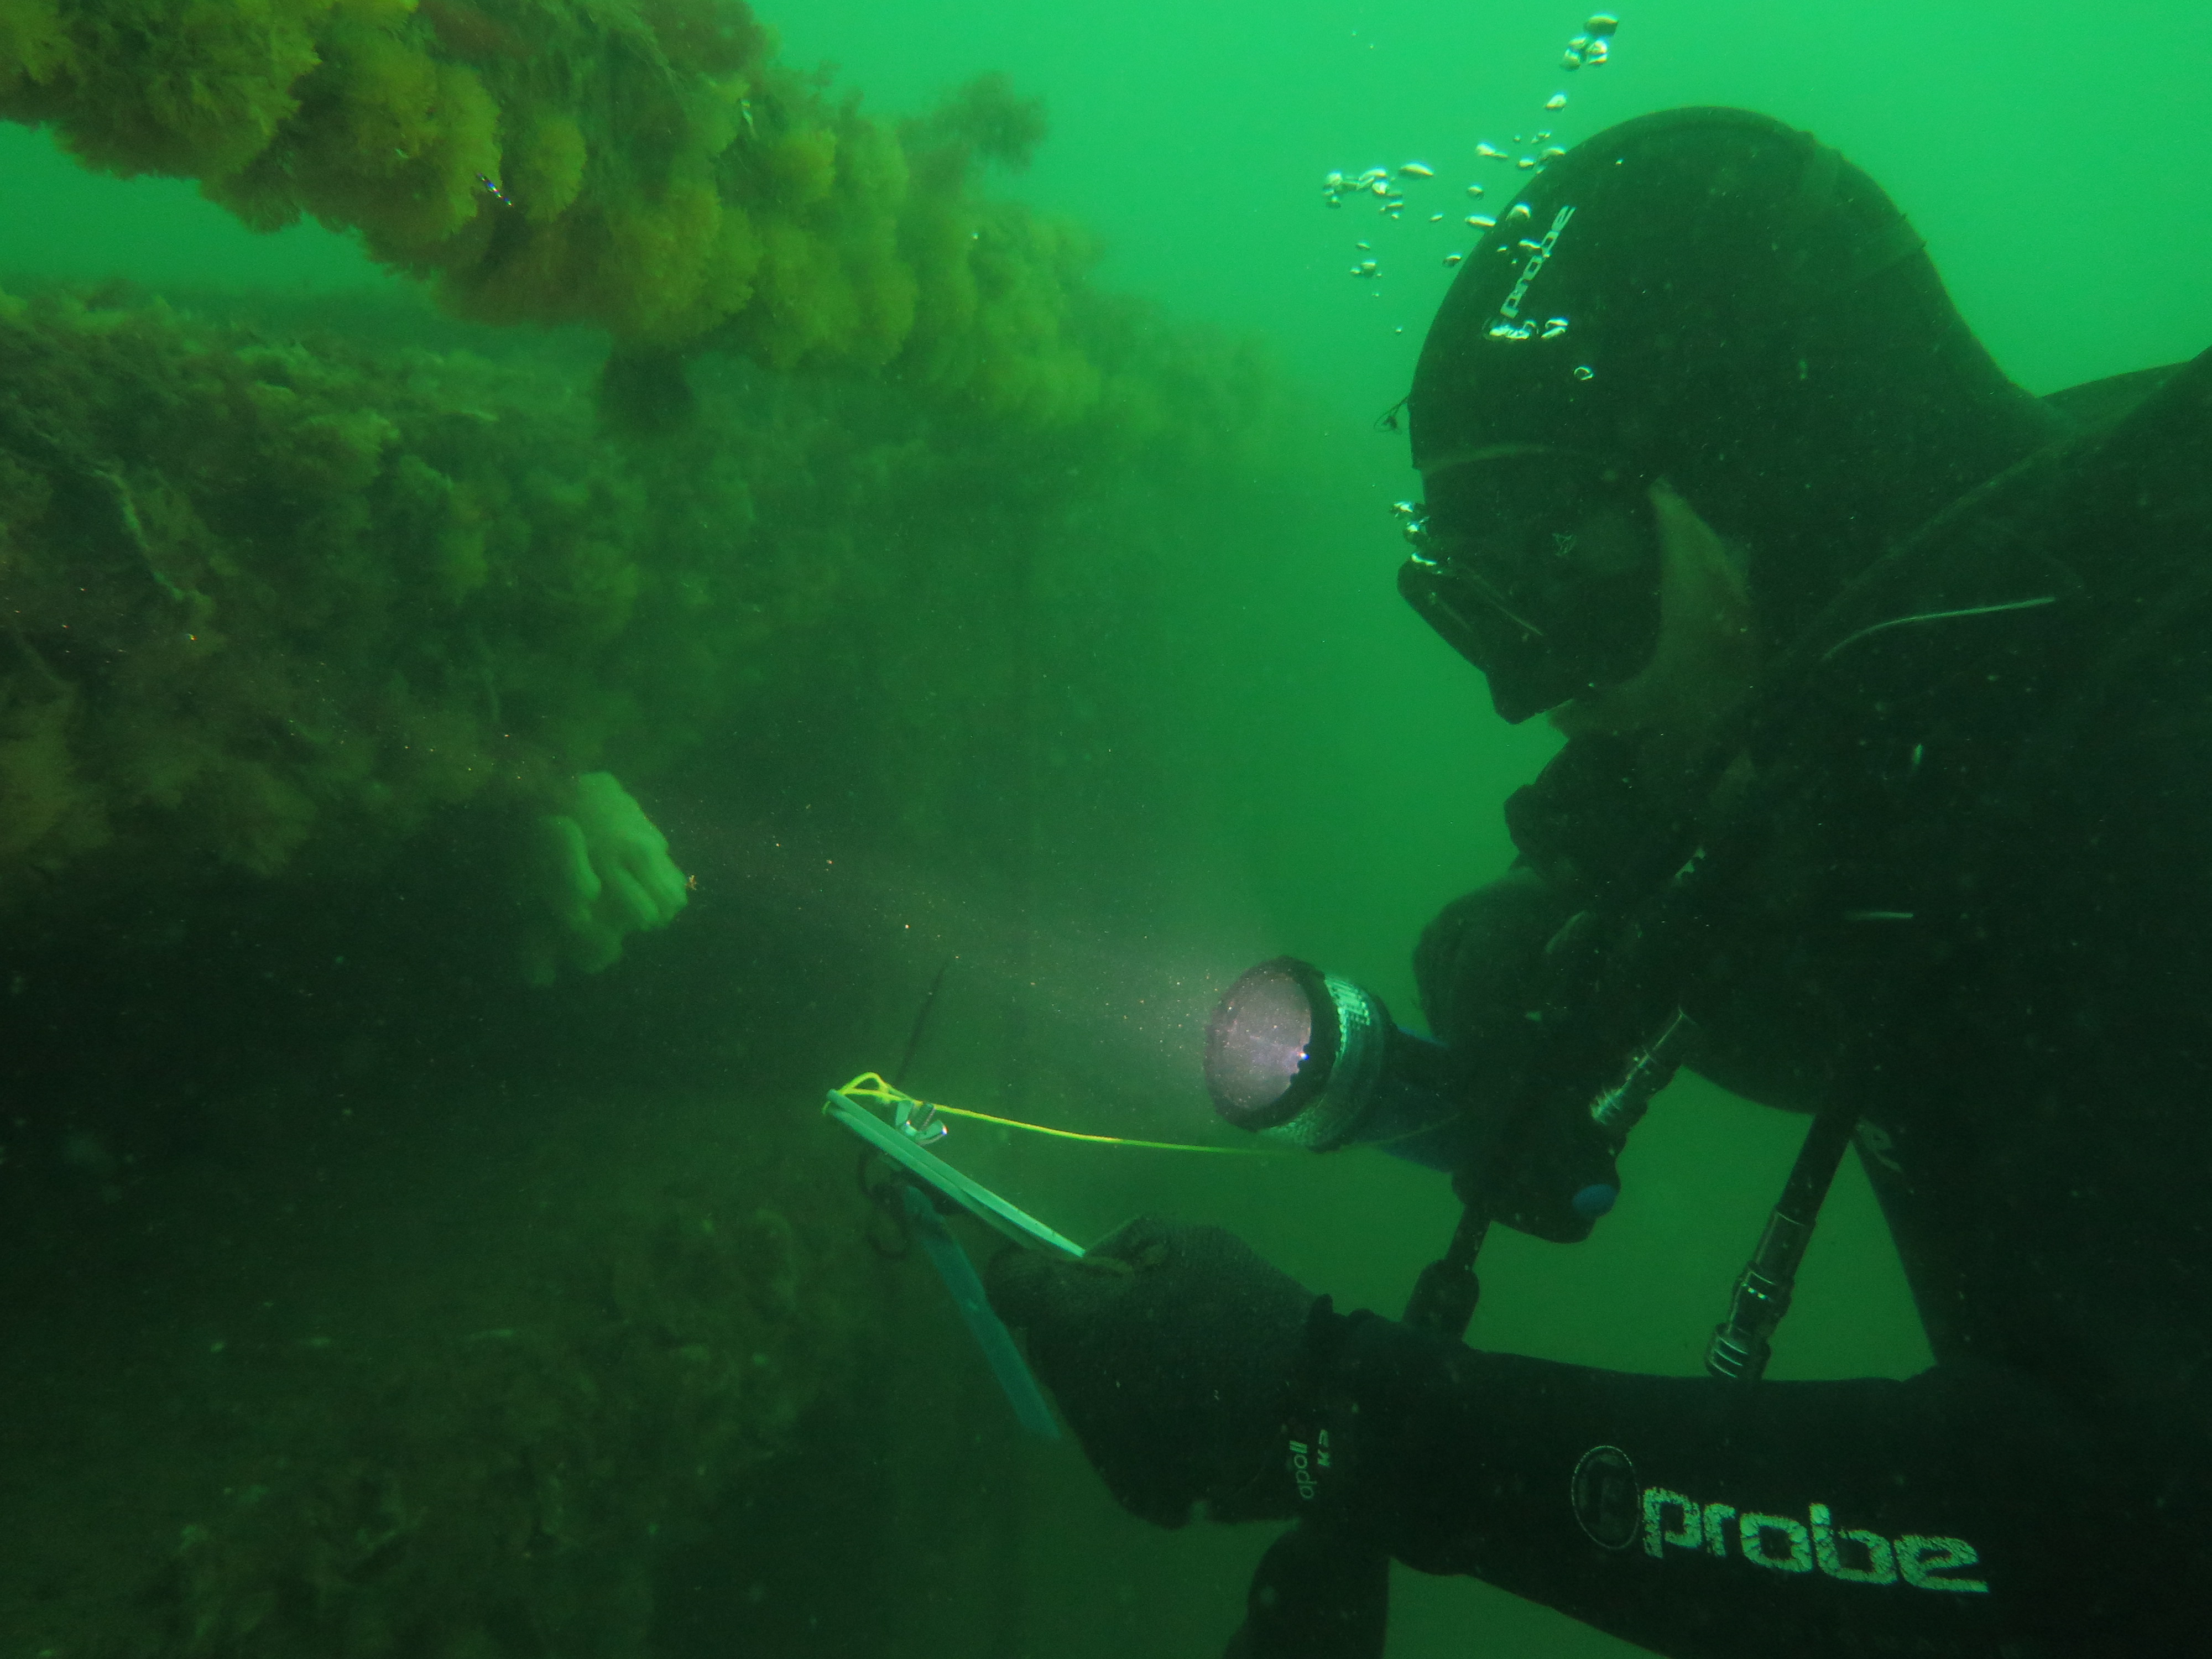 Artificial reef diver